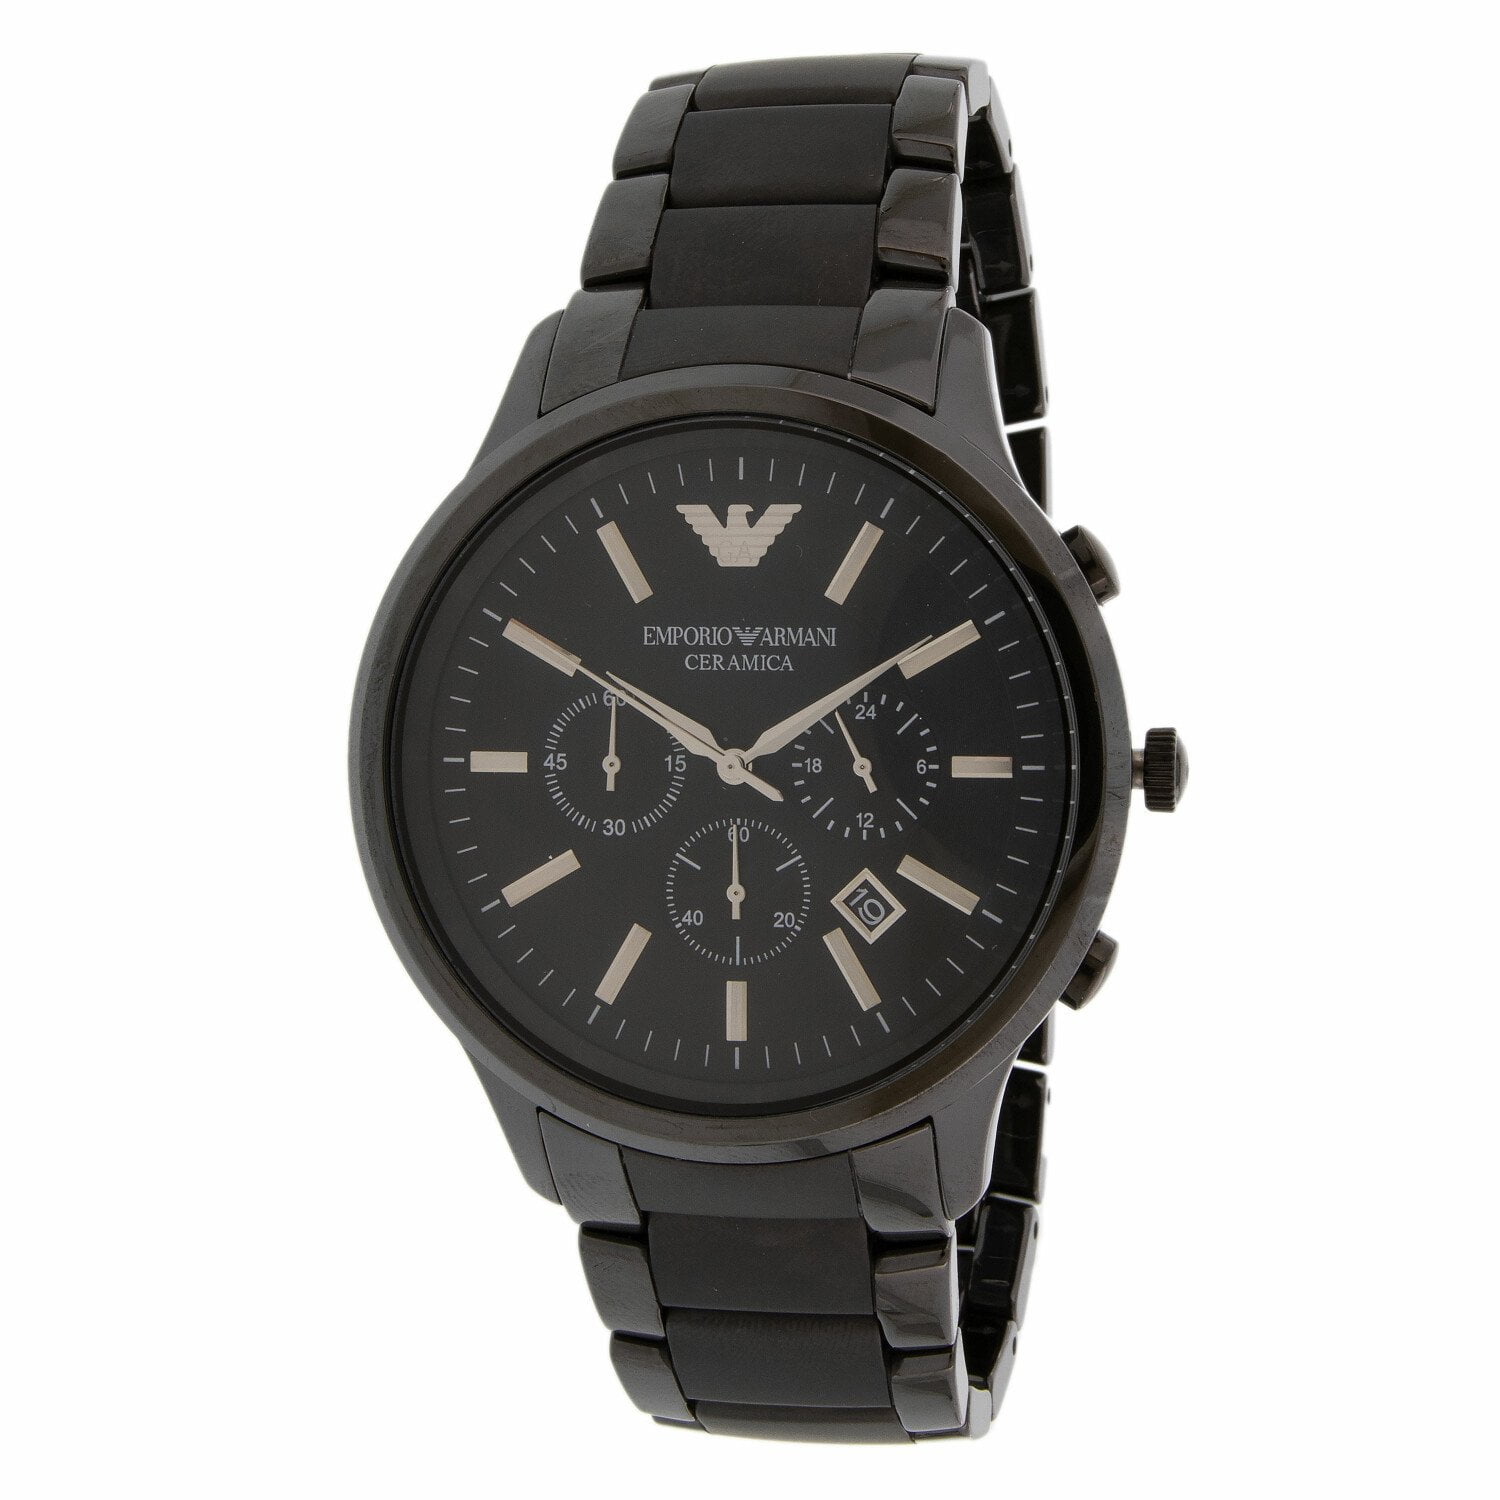 Emporio Armani Ceramic Men's Watch, AR1451 - Walmart.com